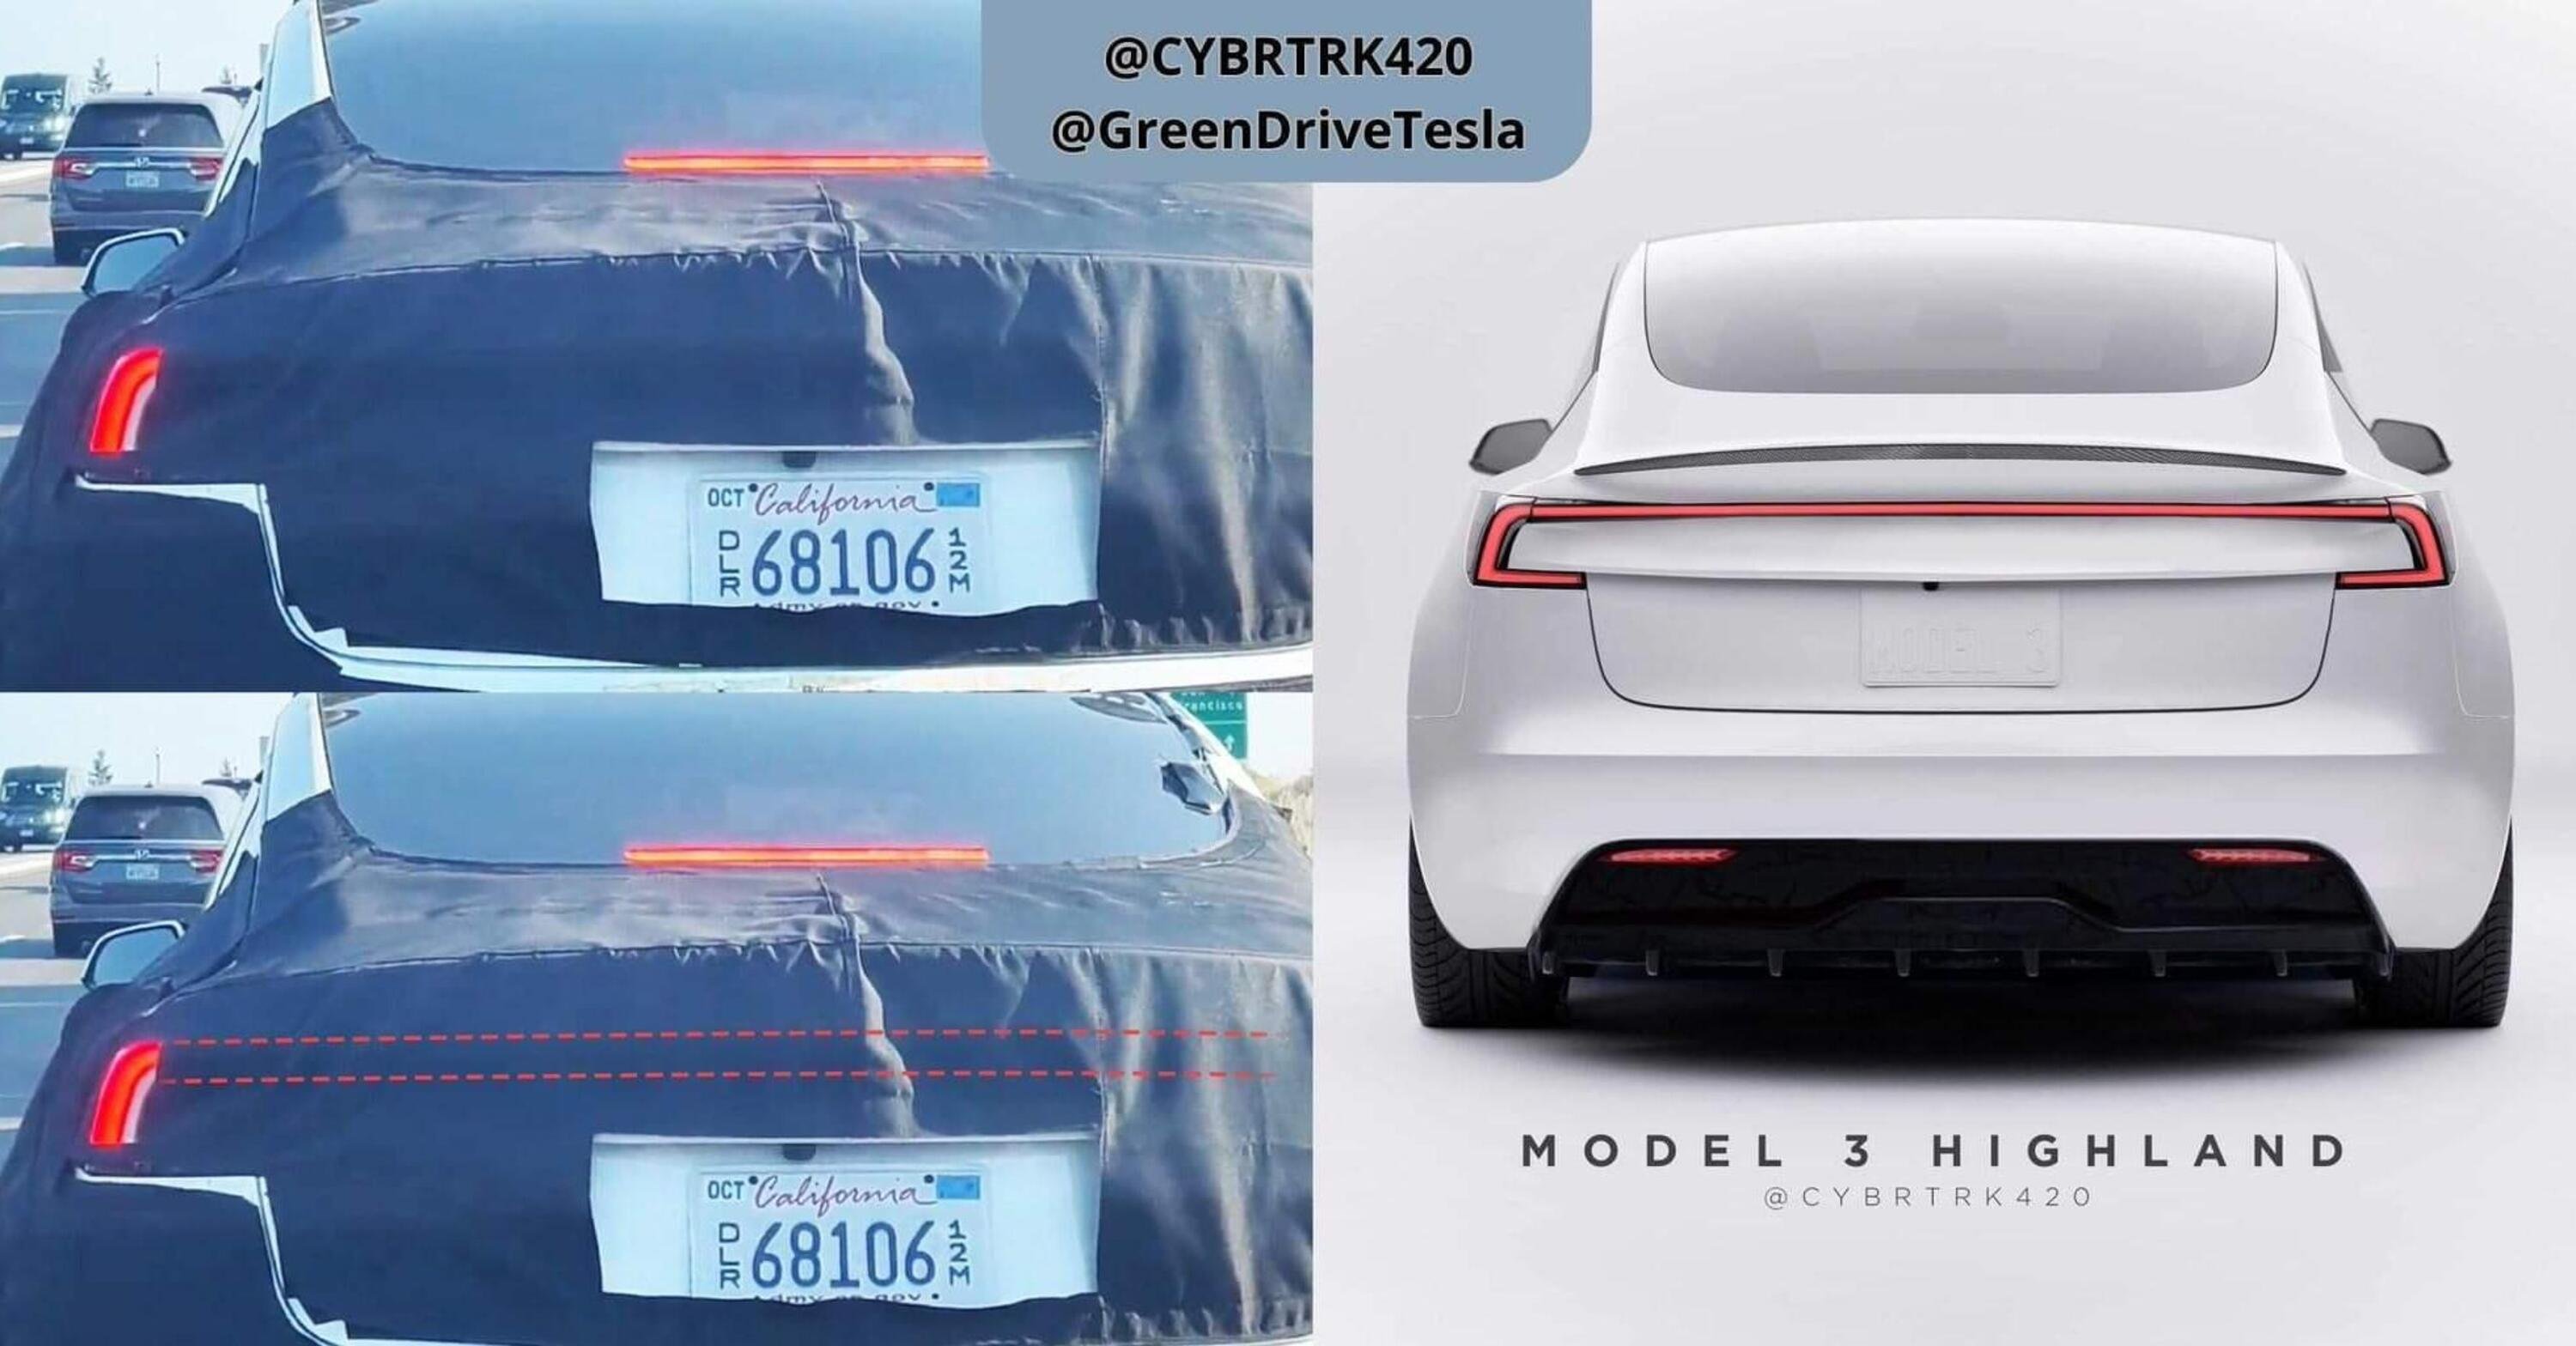 Tesla Model 3 Highland: vista di coda somiglia alla Polestar